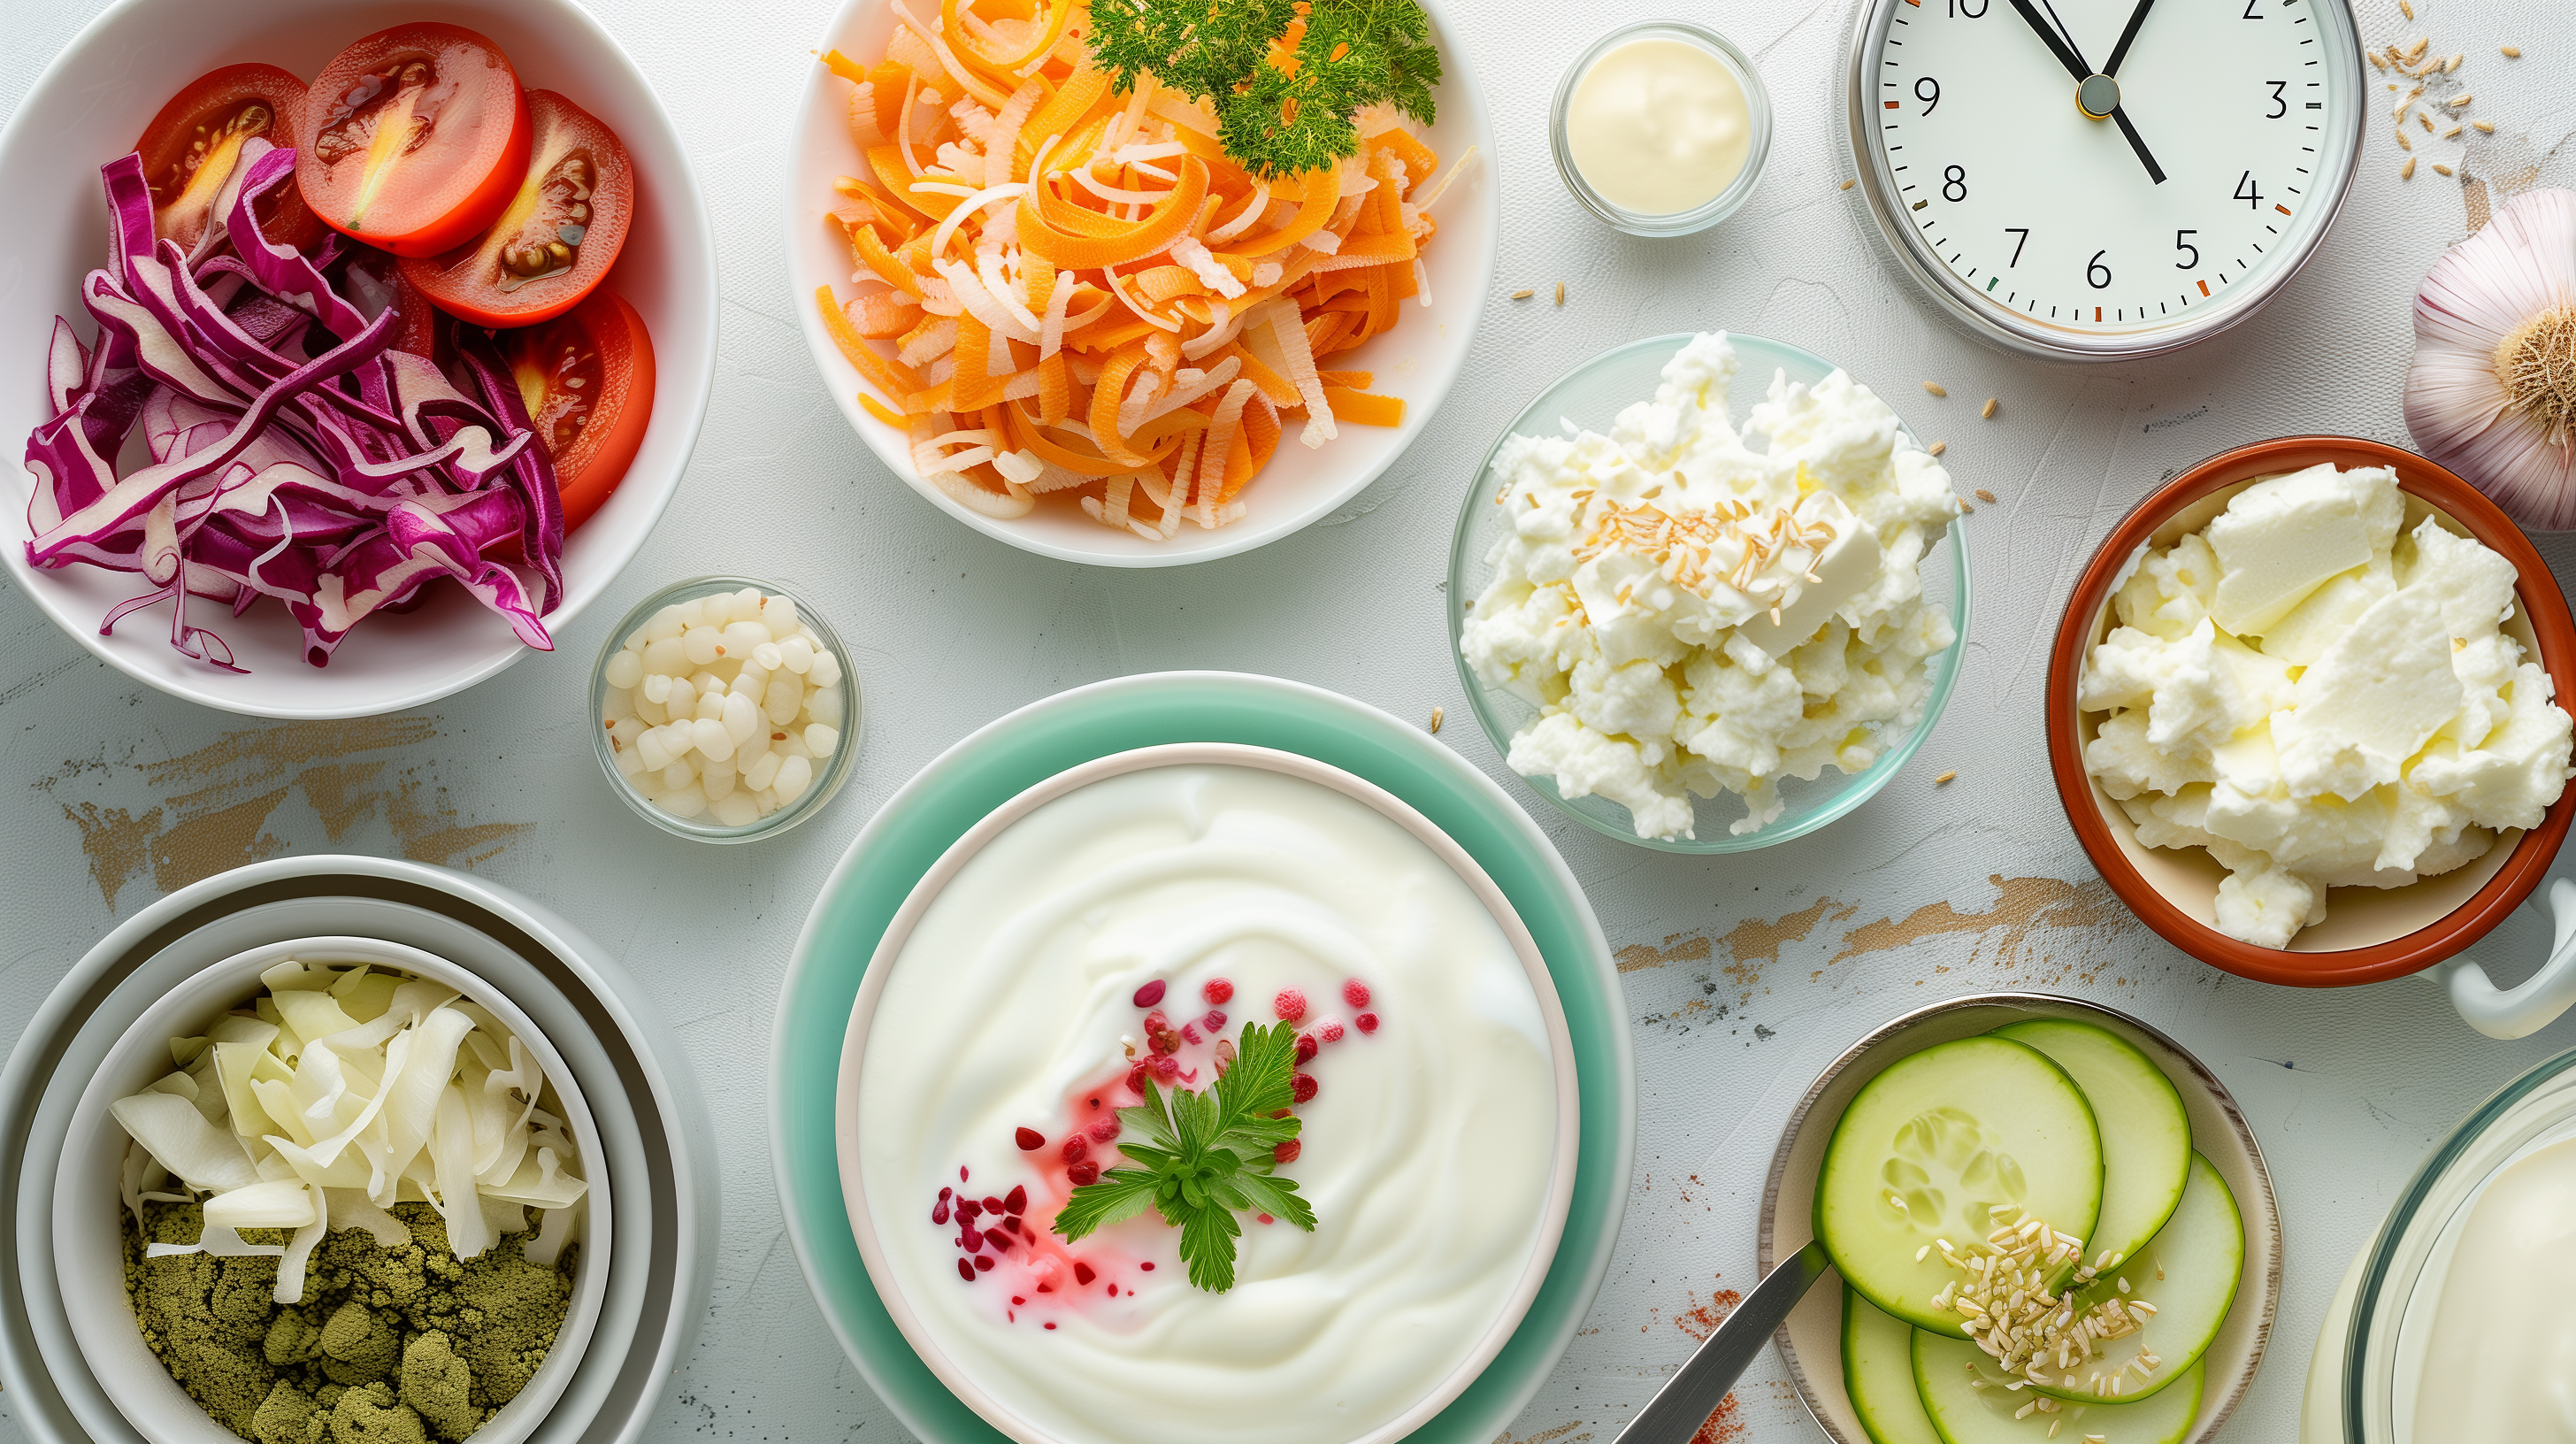 probiotic-rich foods like yogurt, kefir, and sauerkraut,